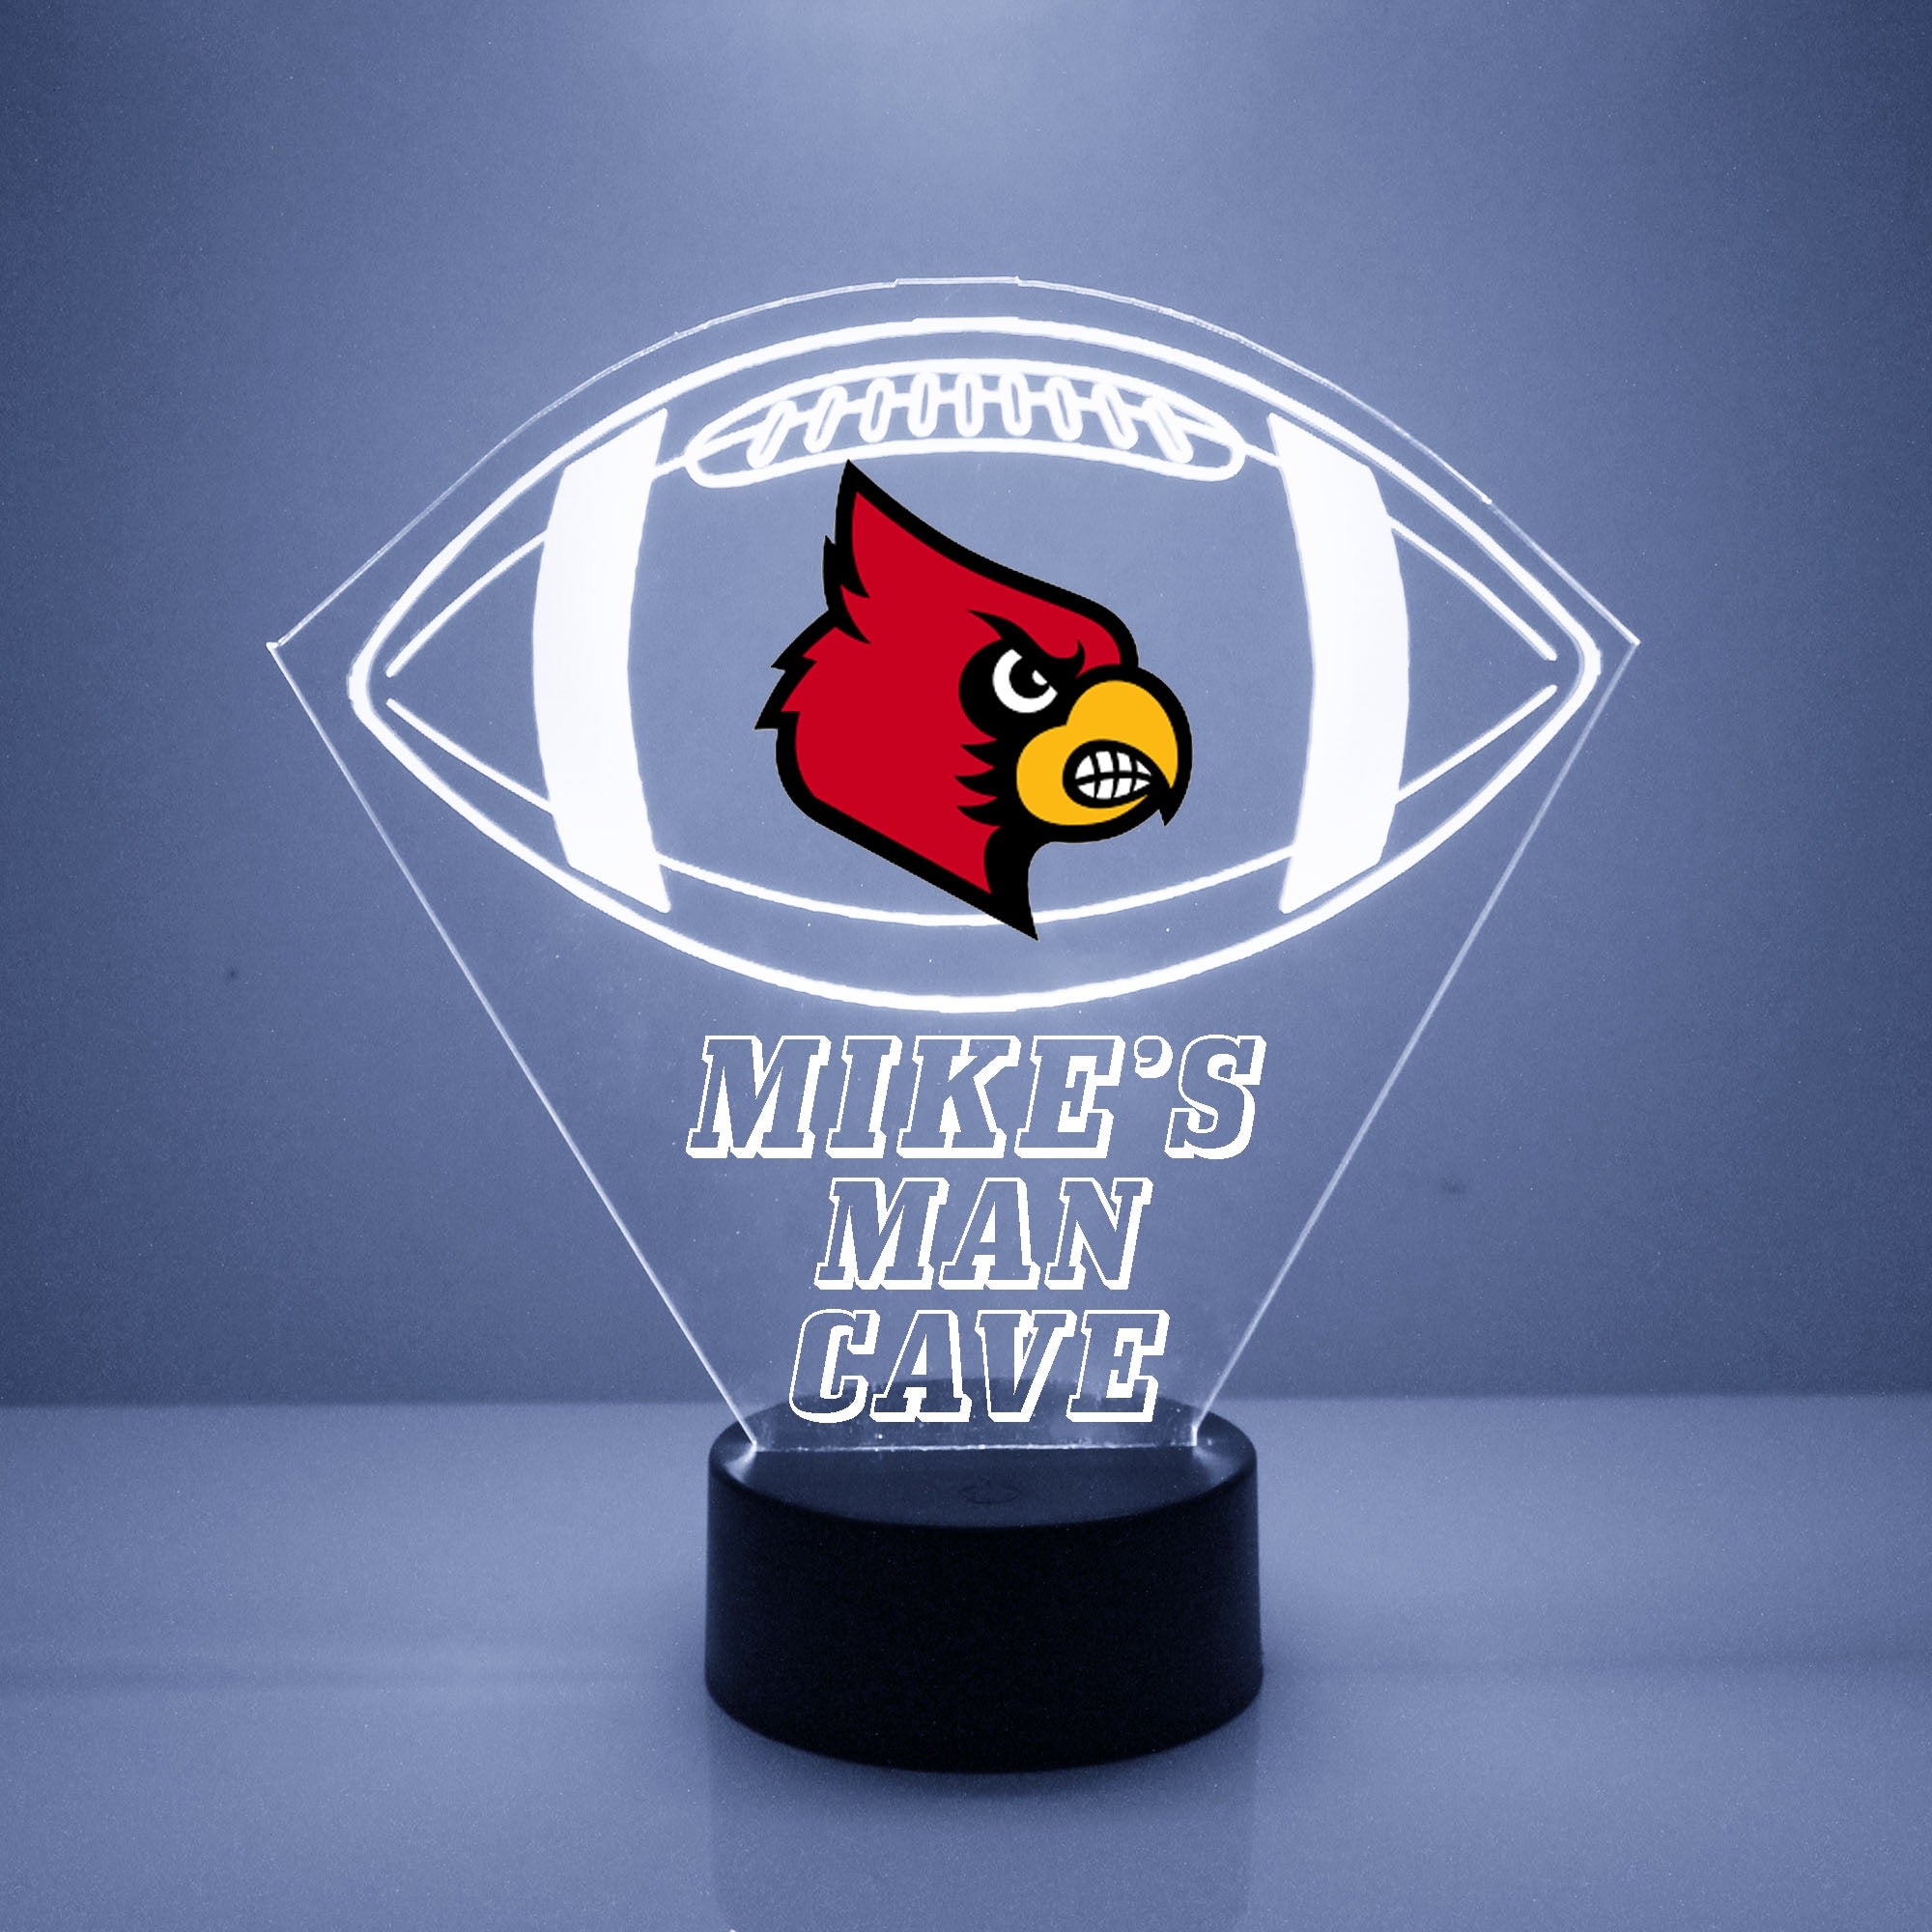 Louisville Cardinals LED Helmet Lamp